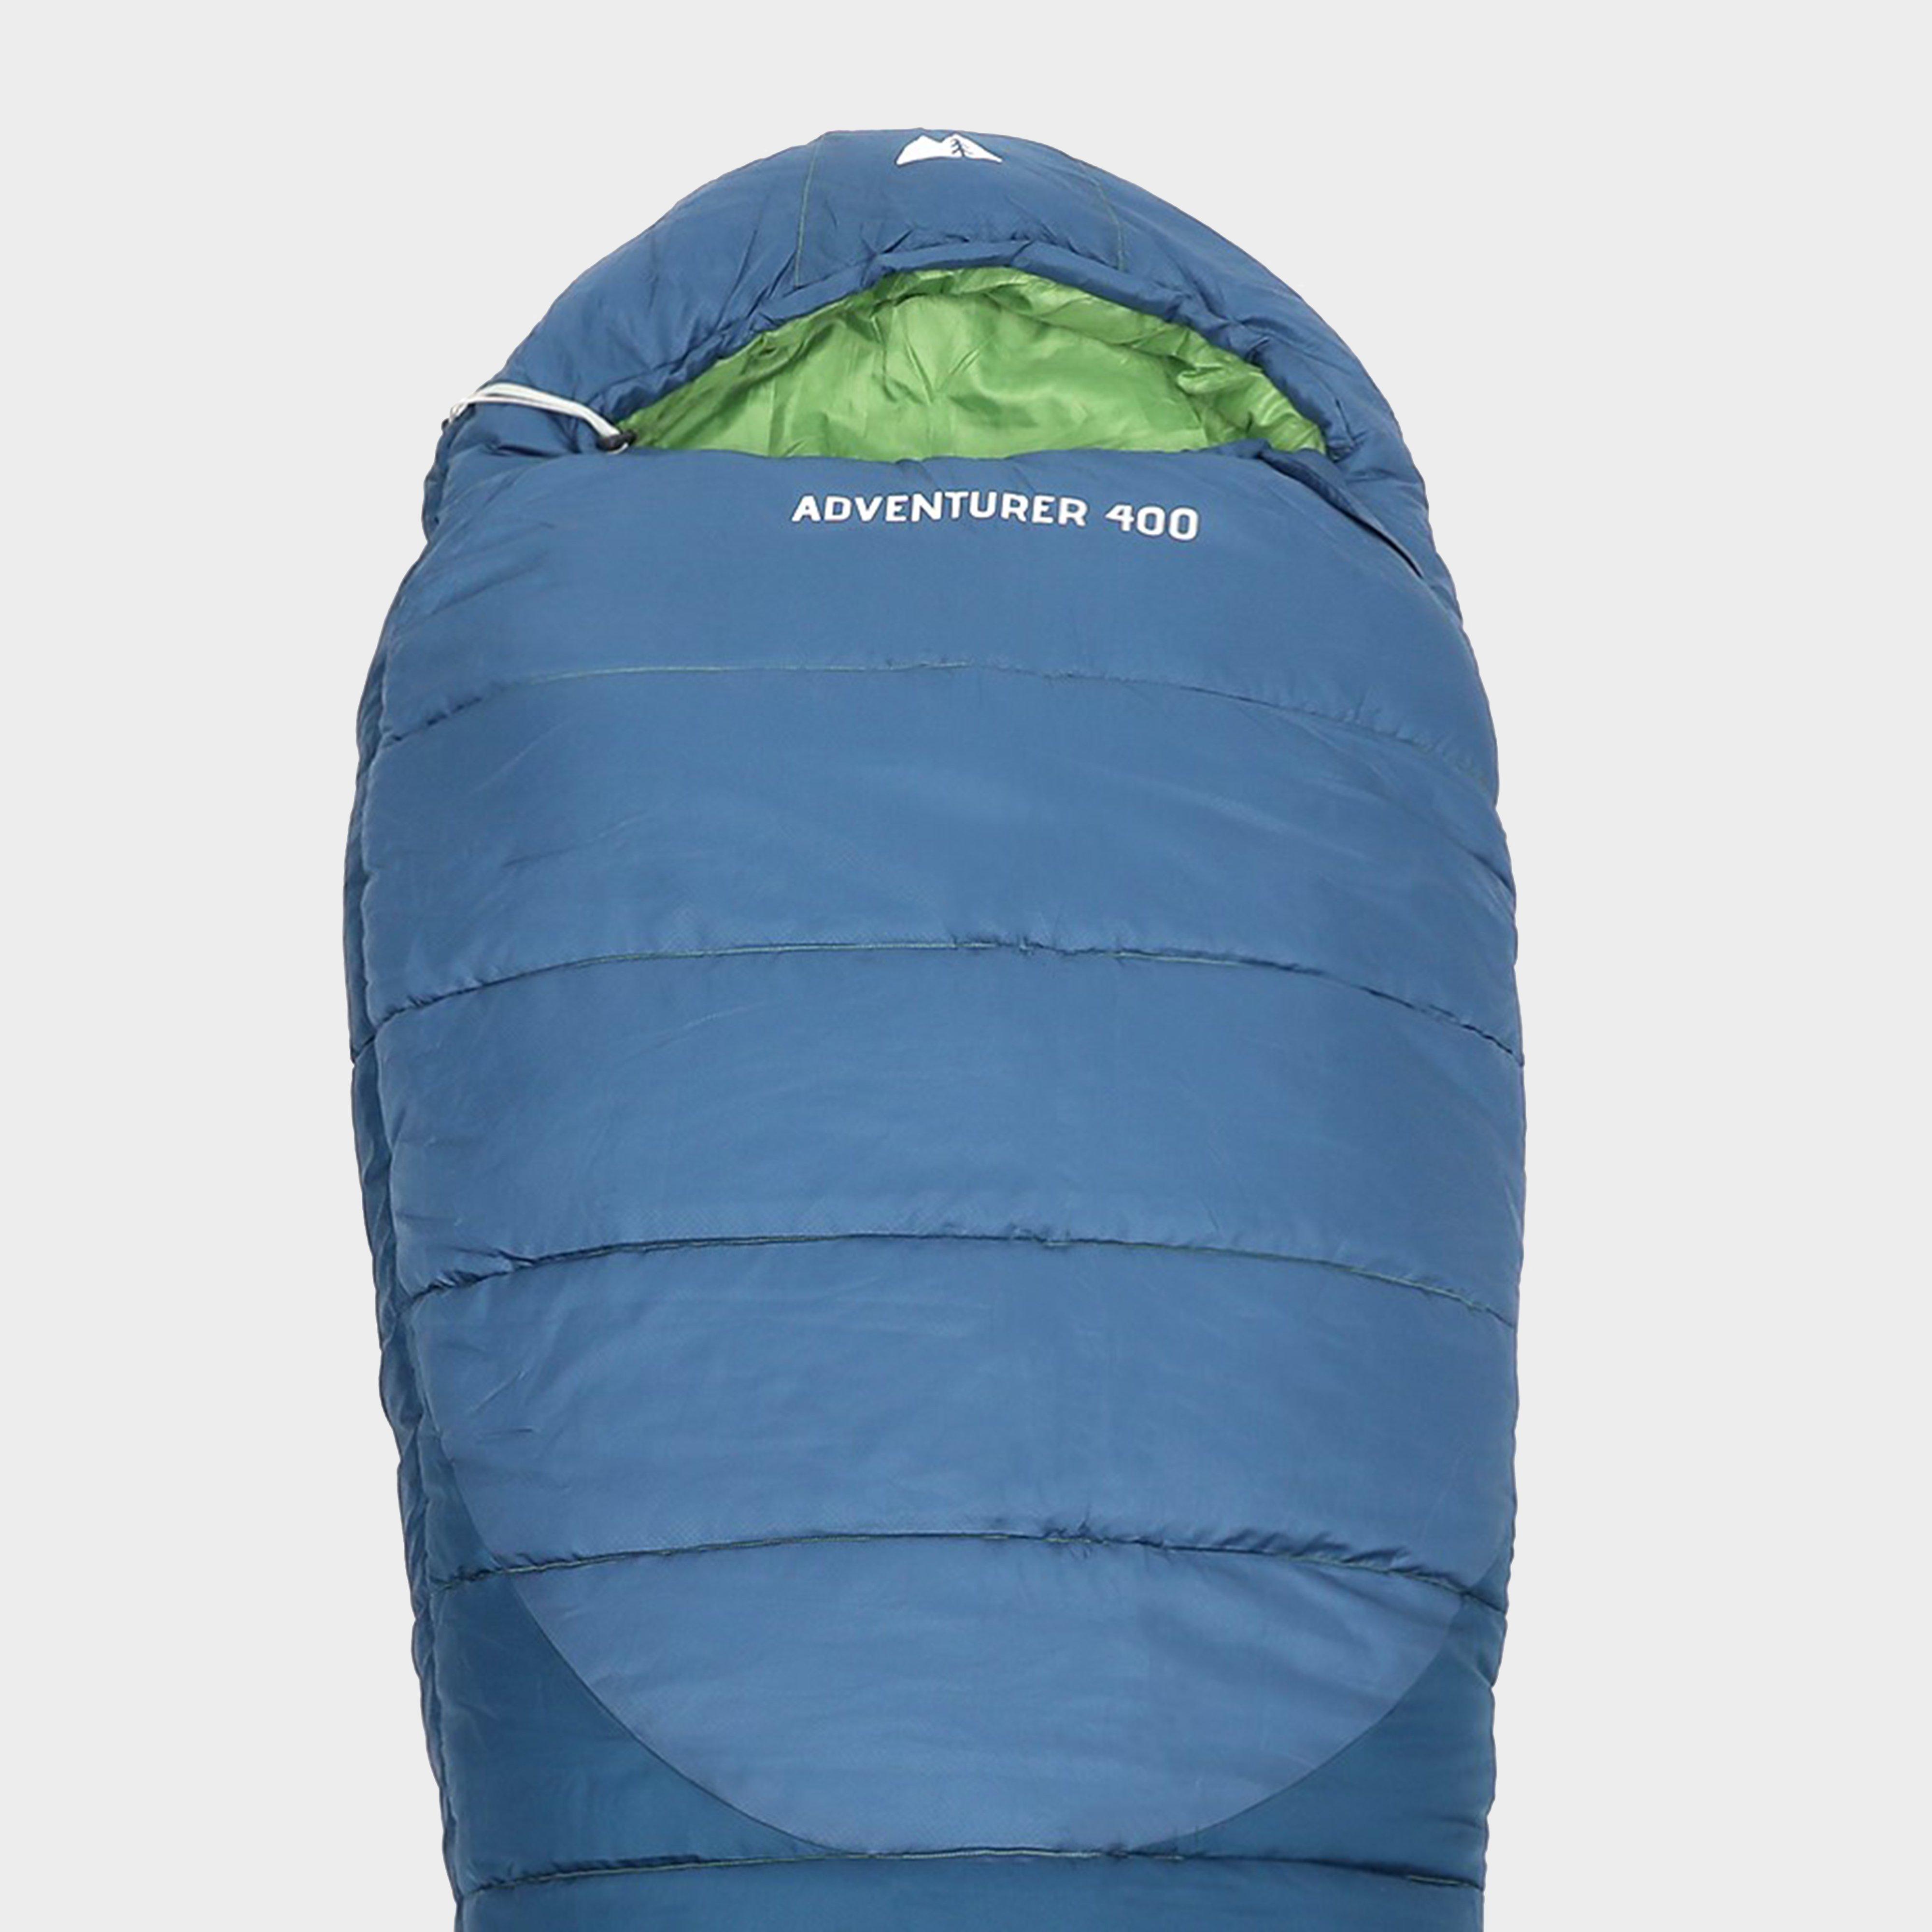  Eurohike Adventurer 400 Sleeping Bag, Blue